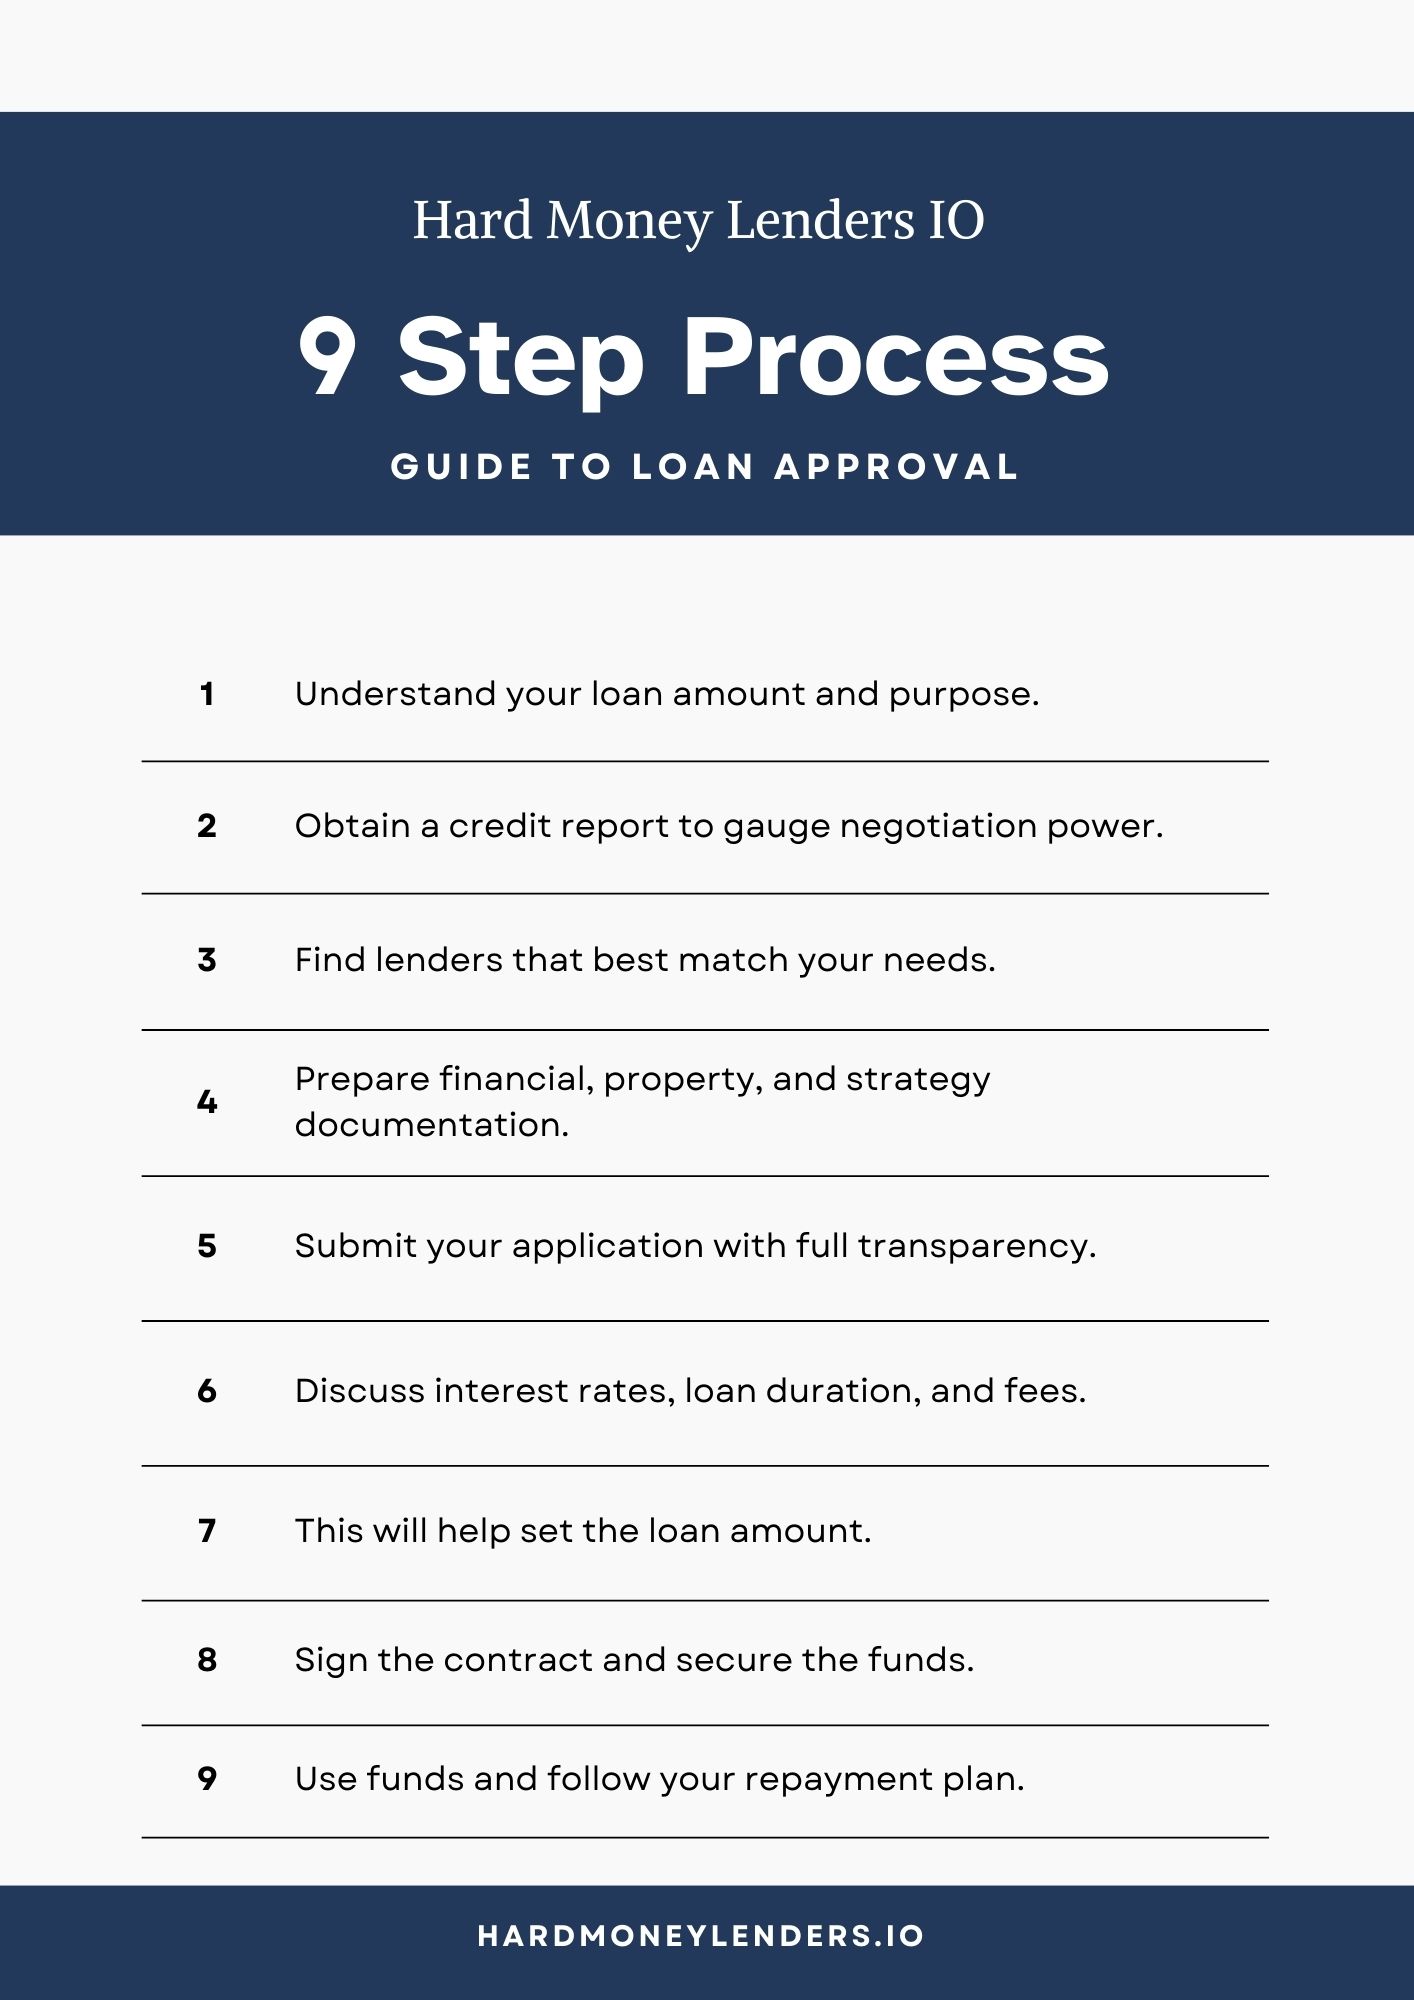 9 Step Process